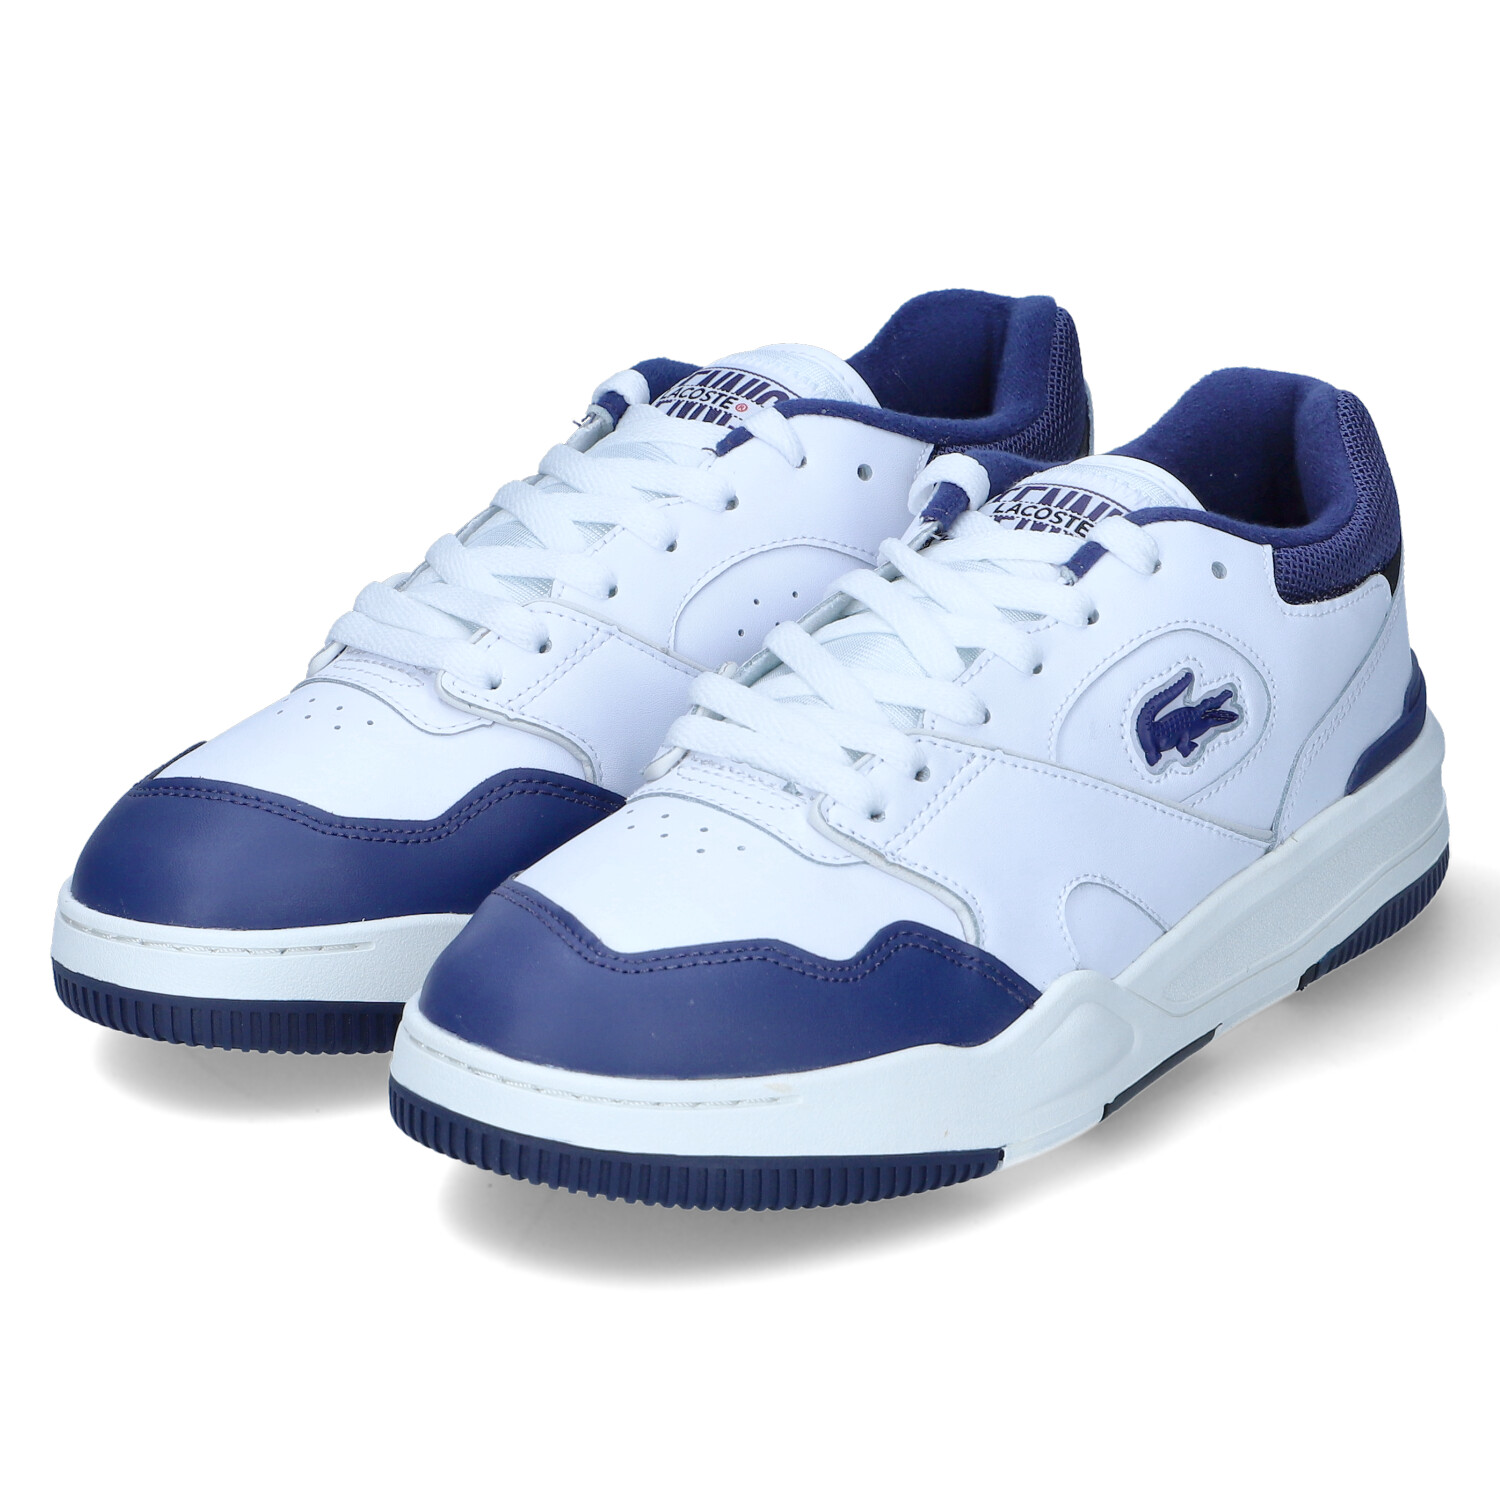 Низкие кроссовки Lacoste Low LINESHOT, белый низкие кроссовки lineshot lacoste цвет white light blue